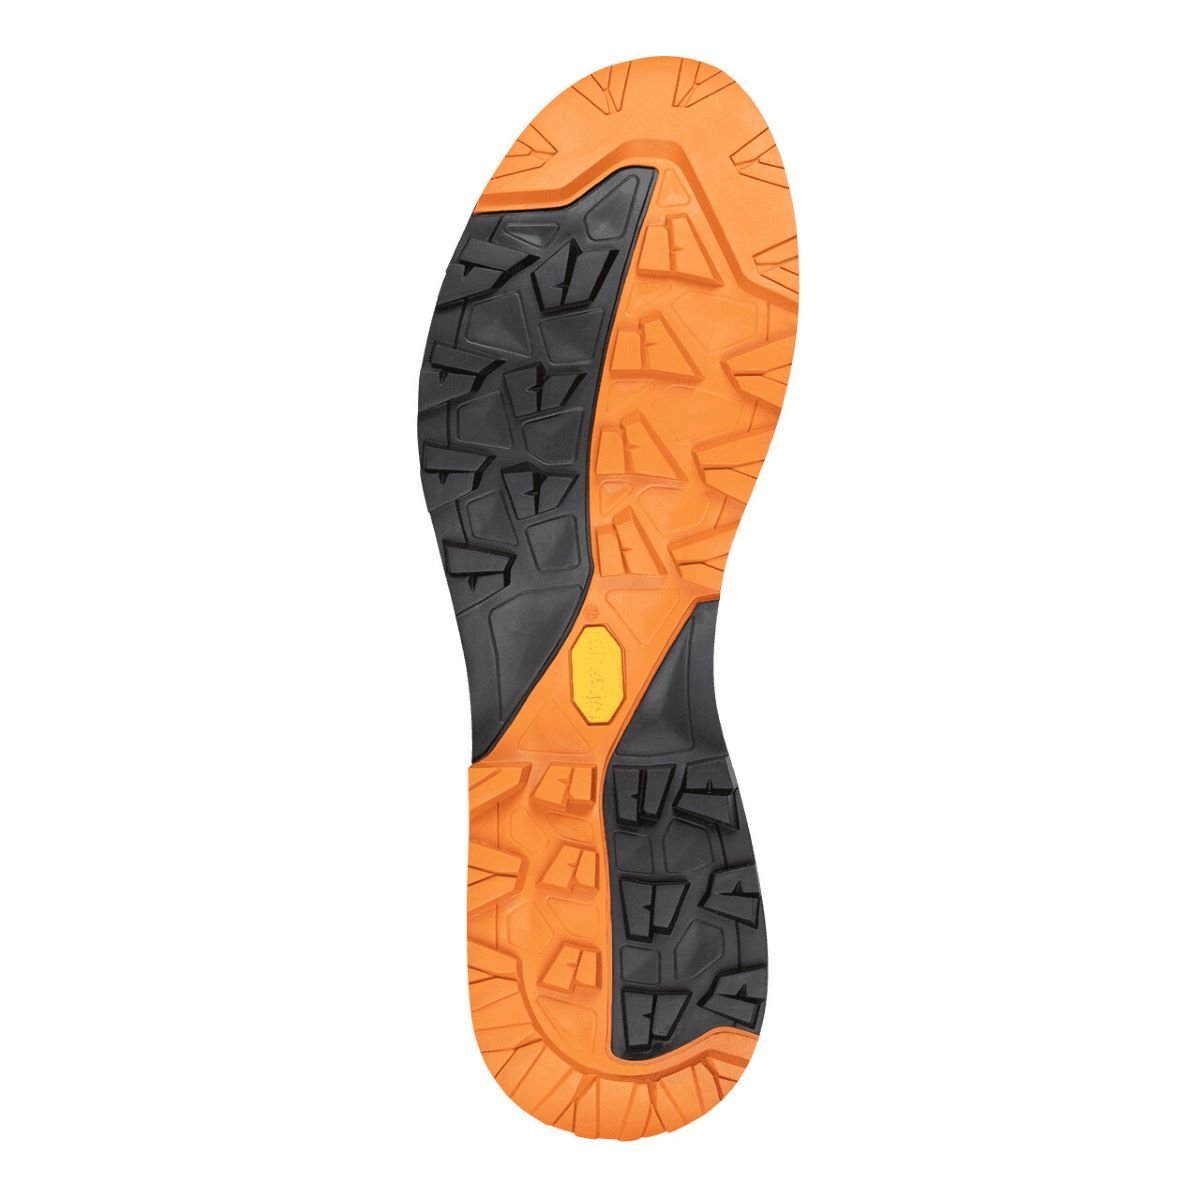 Topánky AKU Rock Dfs GTX M - čierna/oranžová